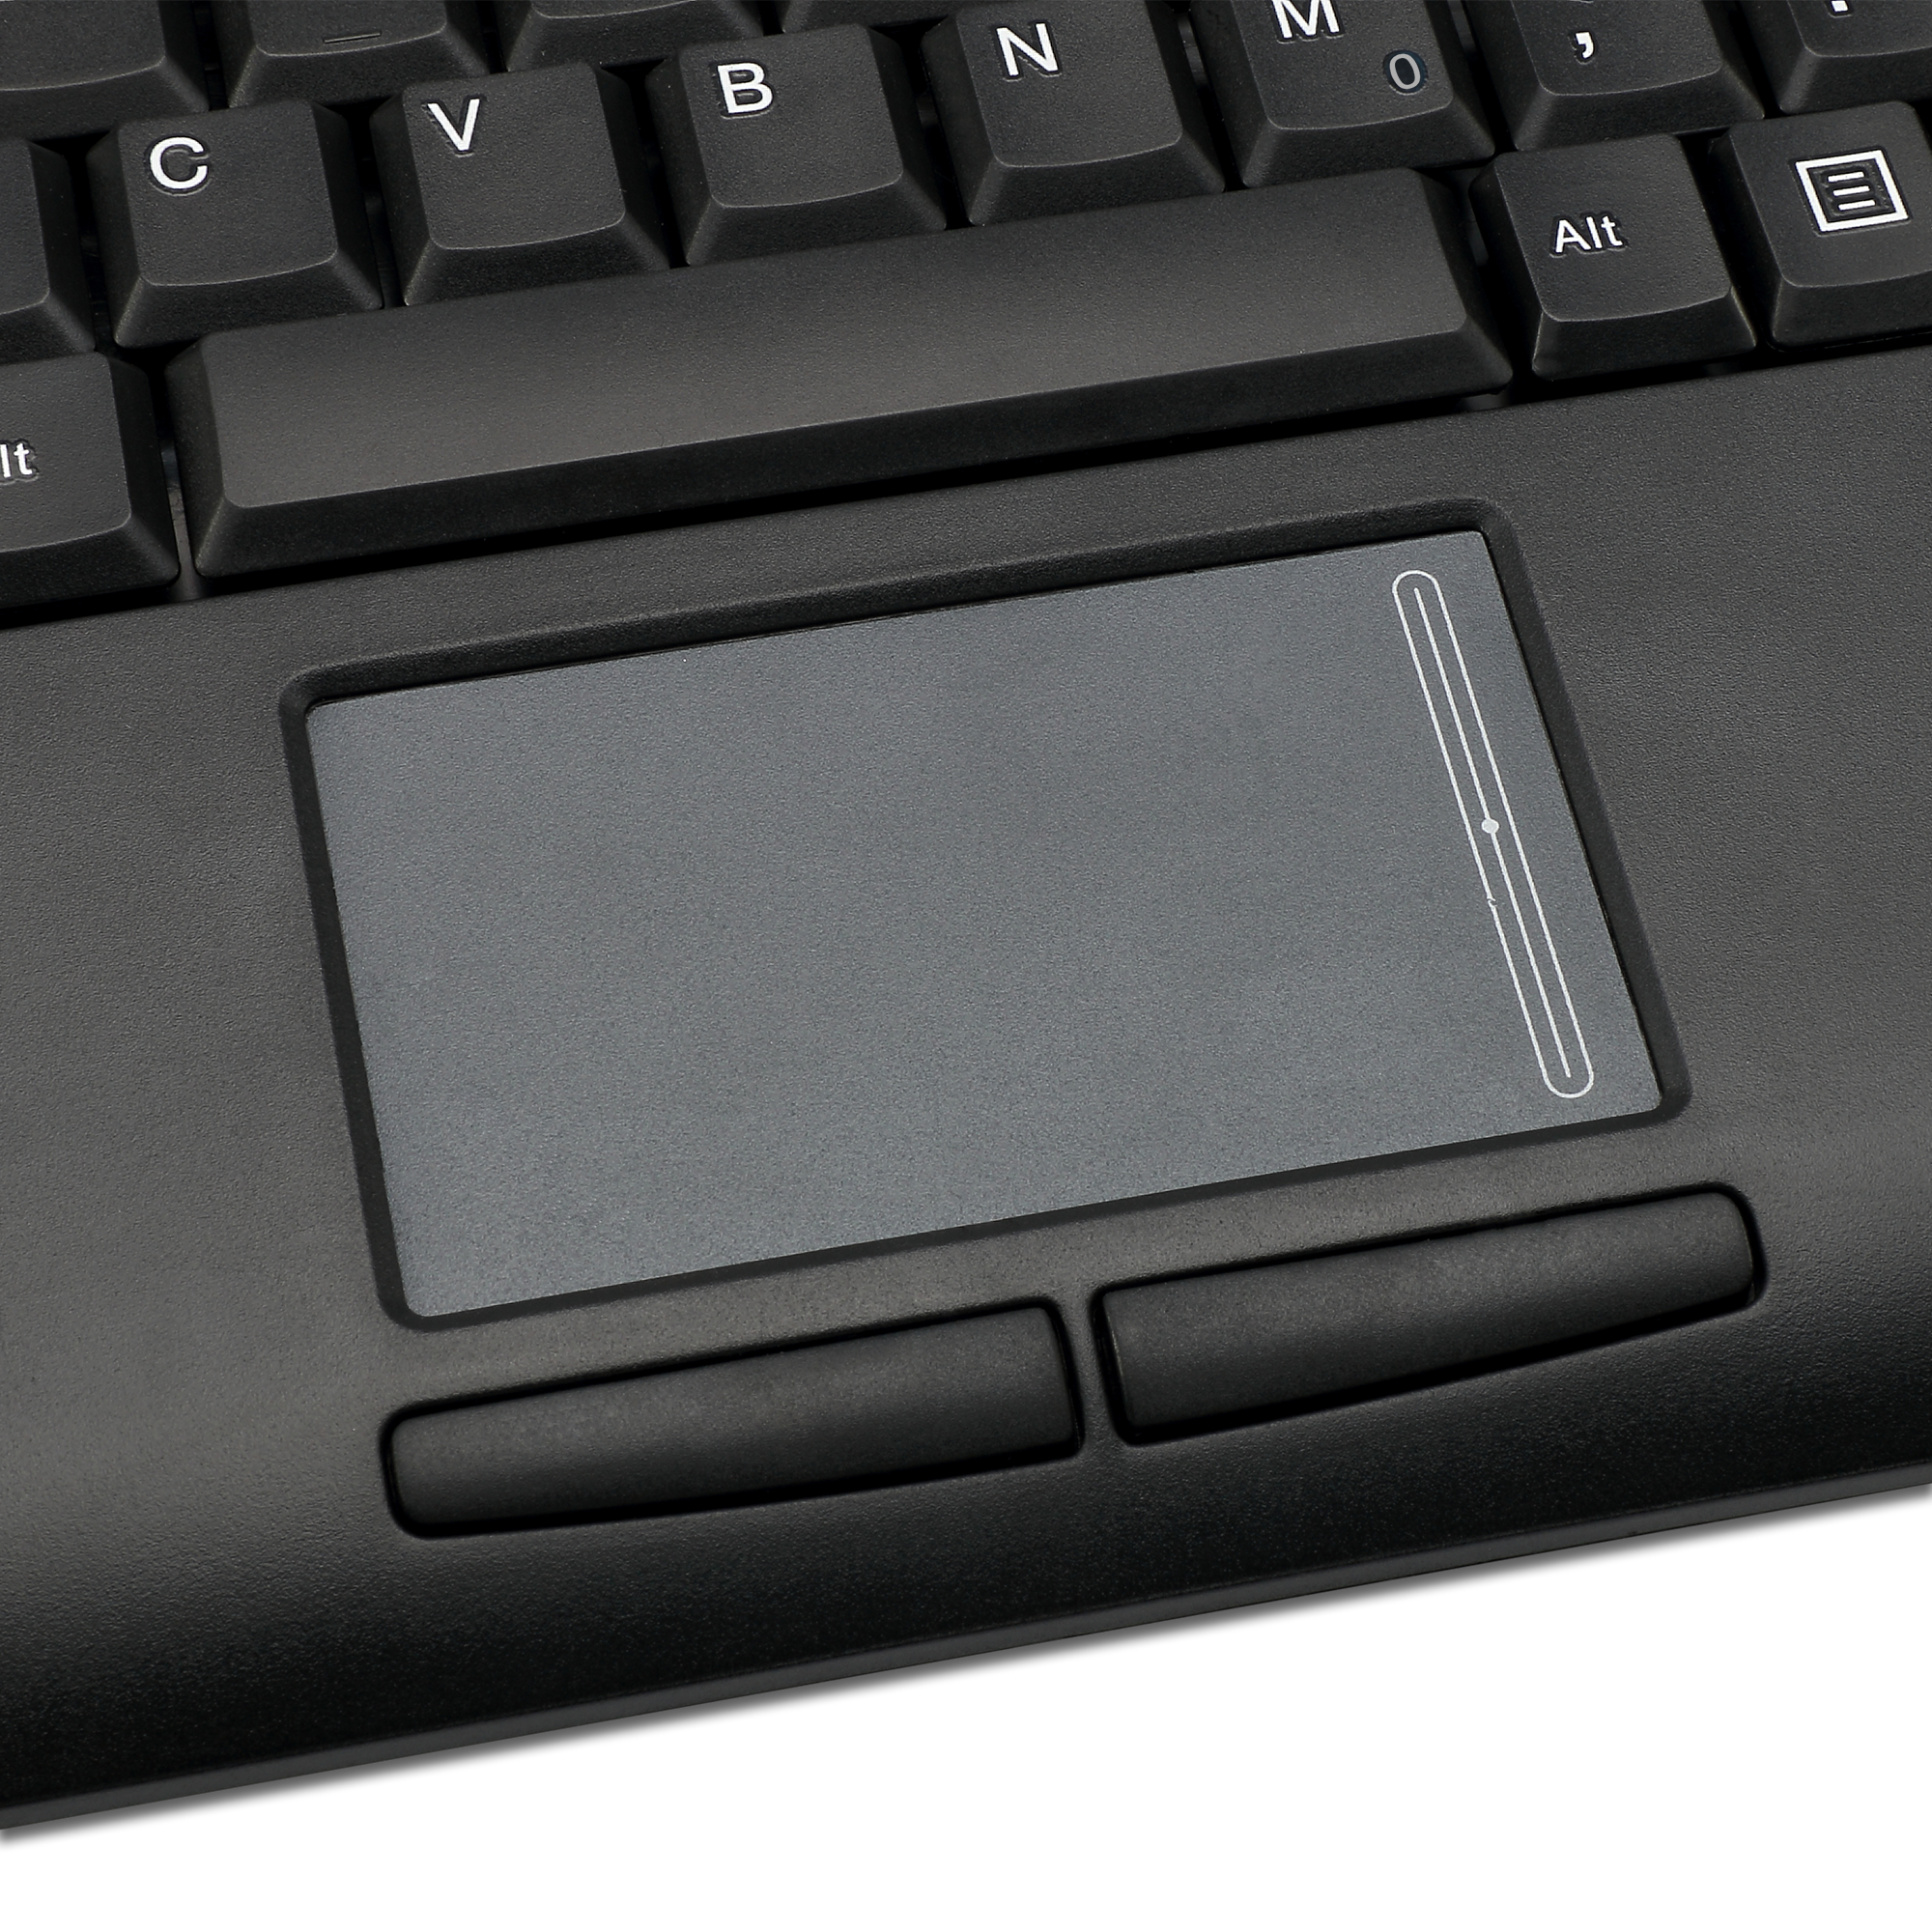 Wireless Mini Touchpad Keyboard - Adesso Inc ::: Your Input Device 